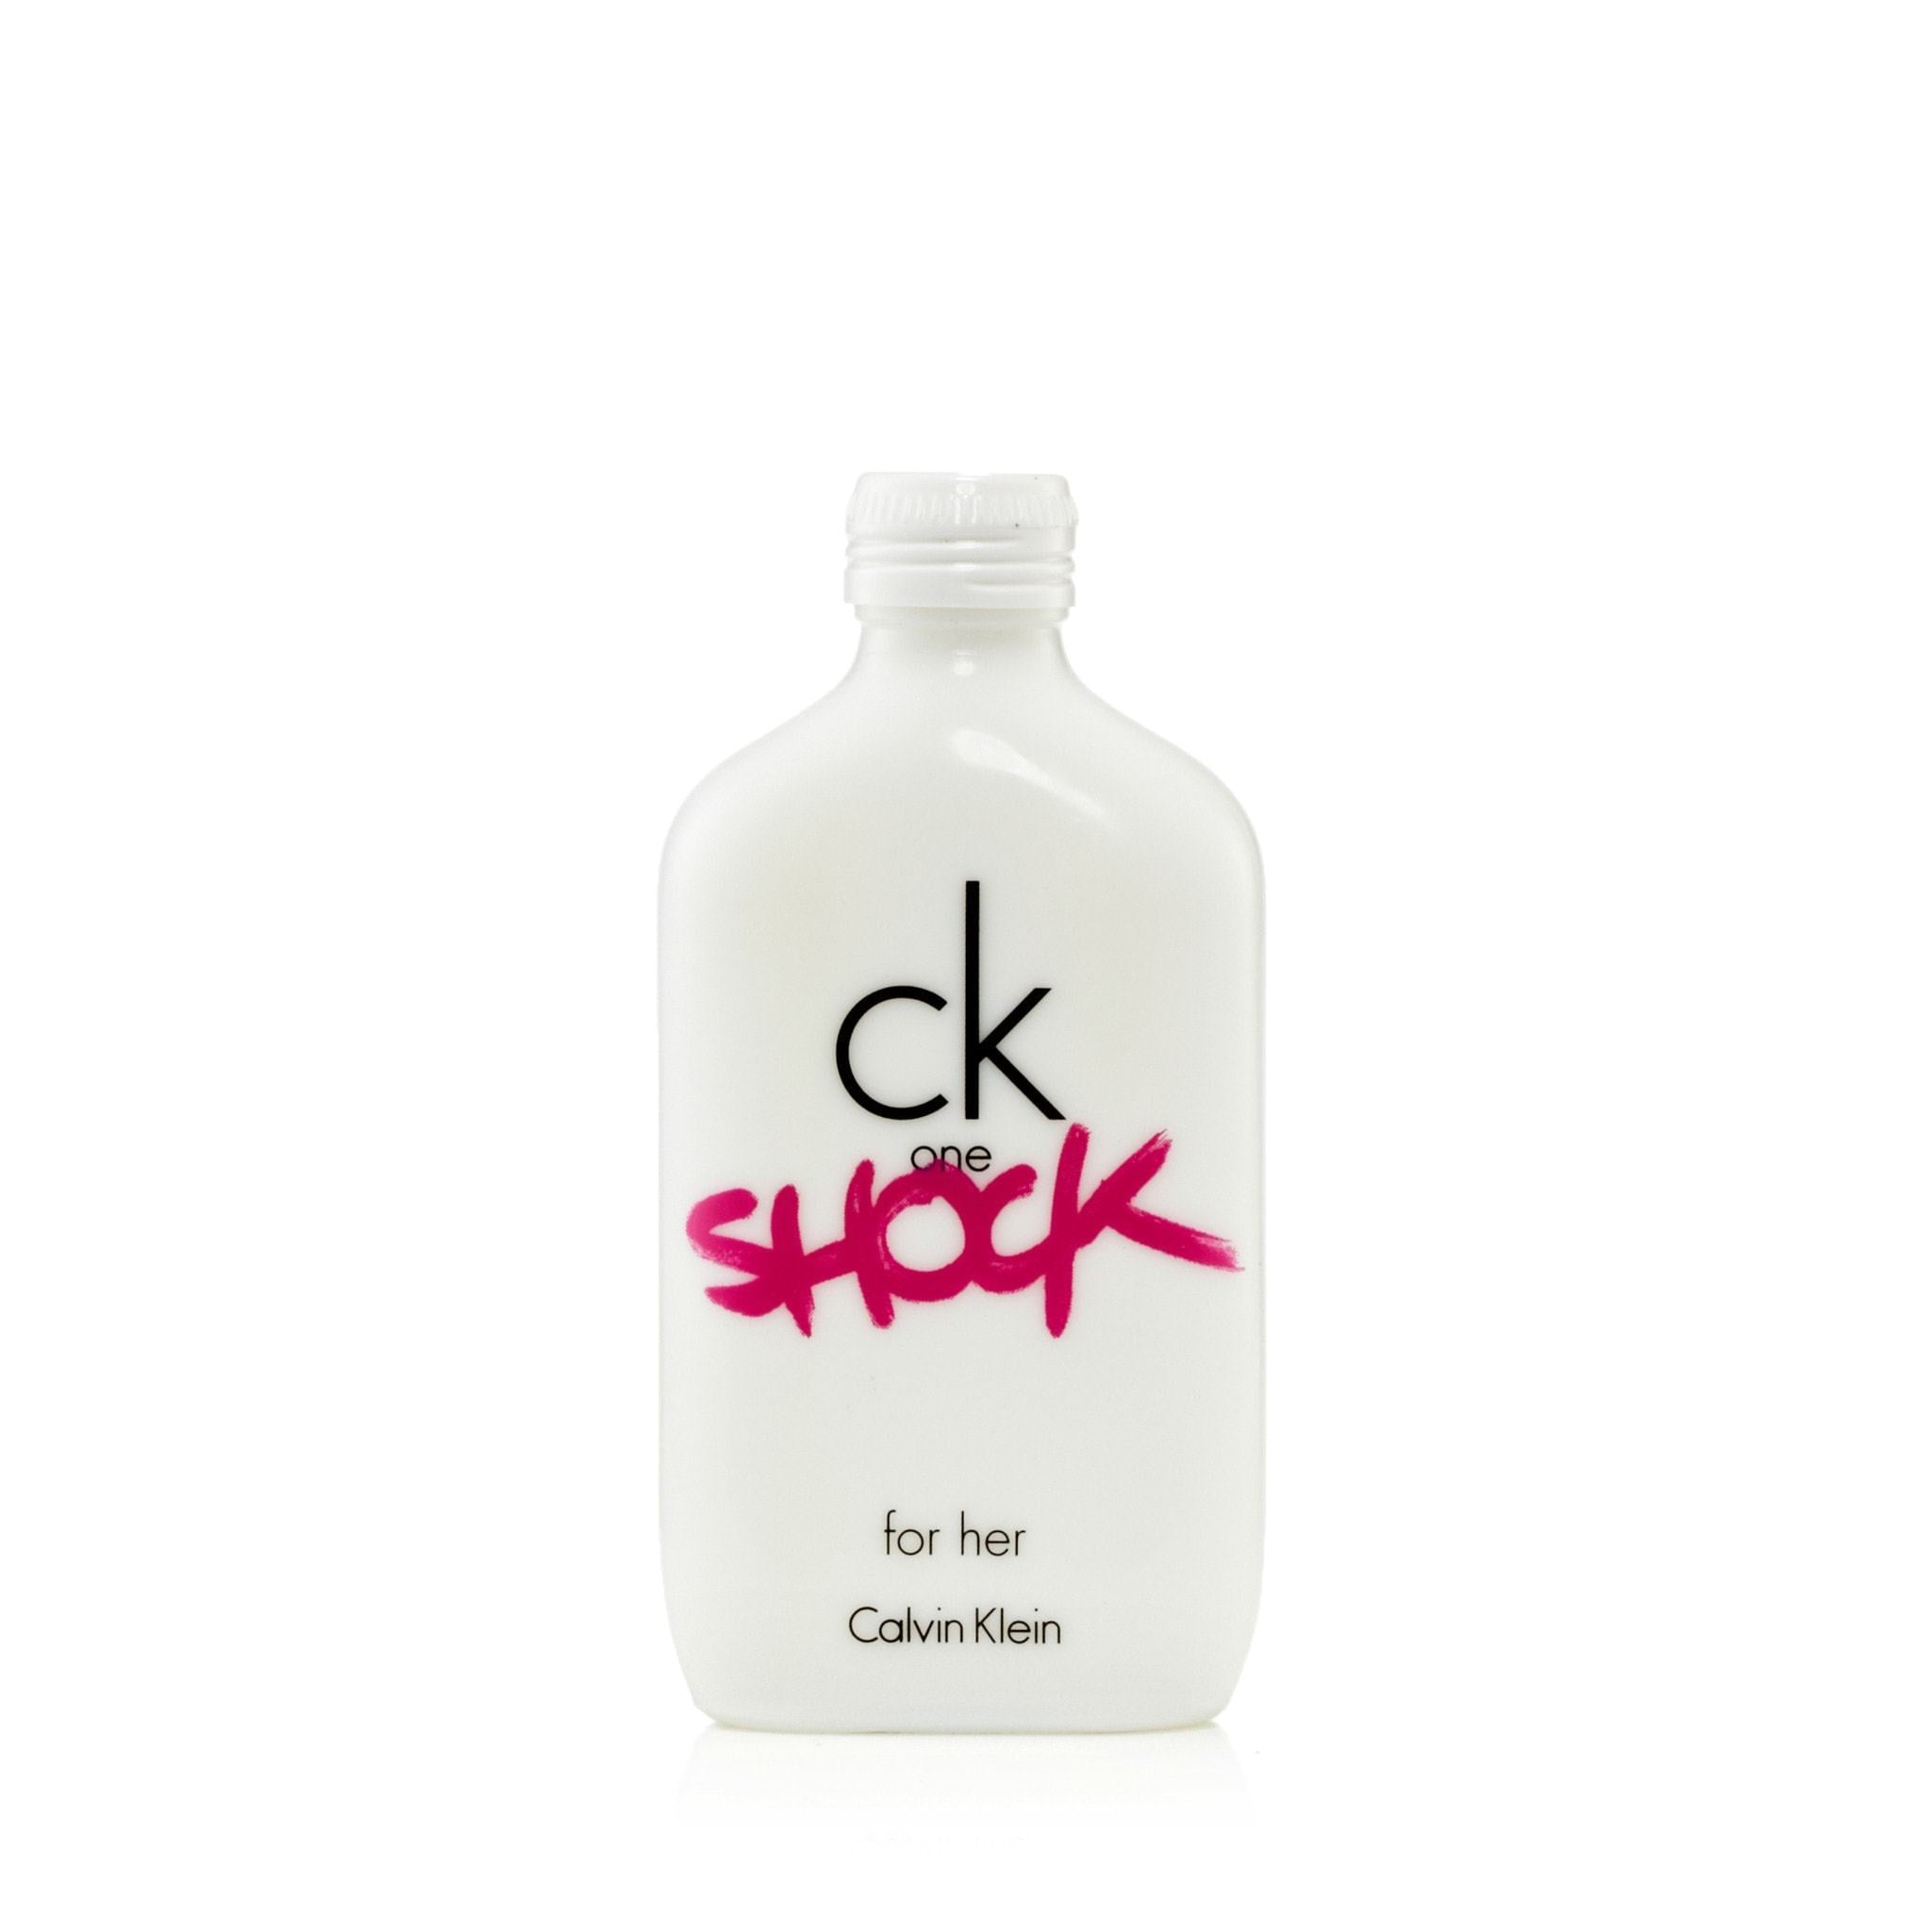 calvin klein shock perfume price